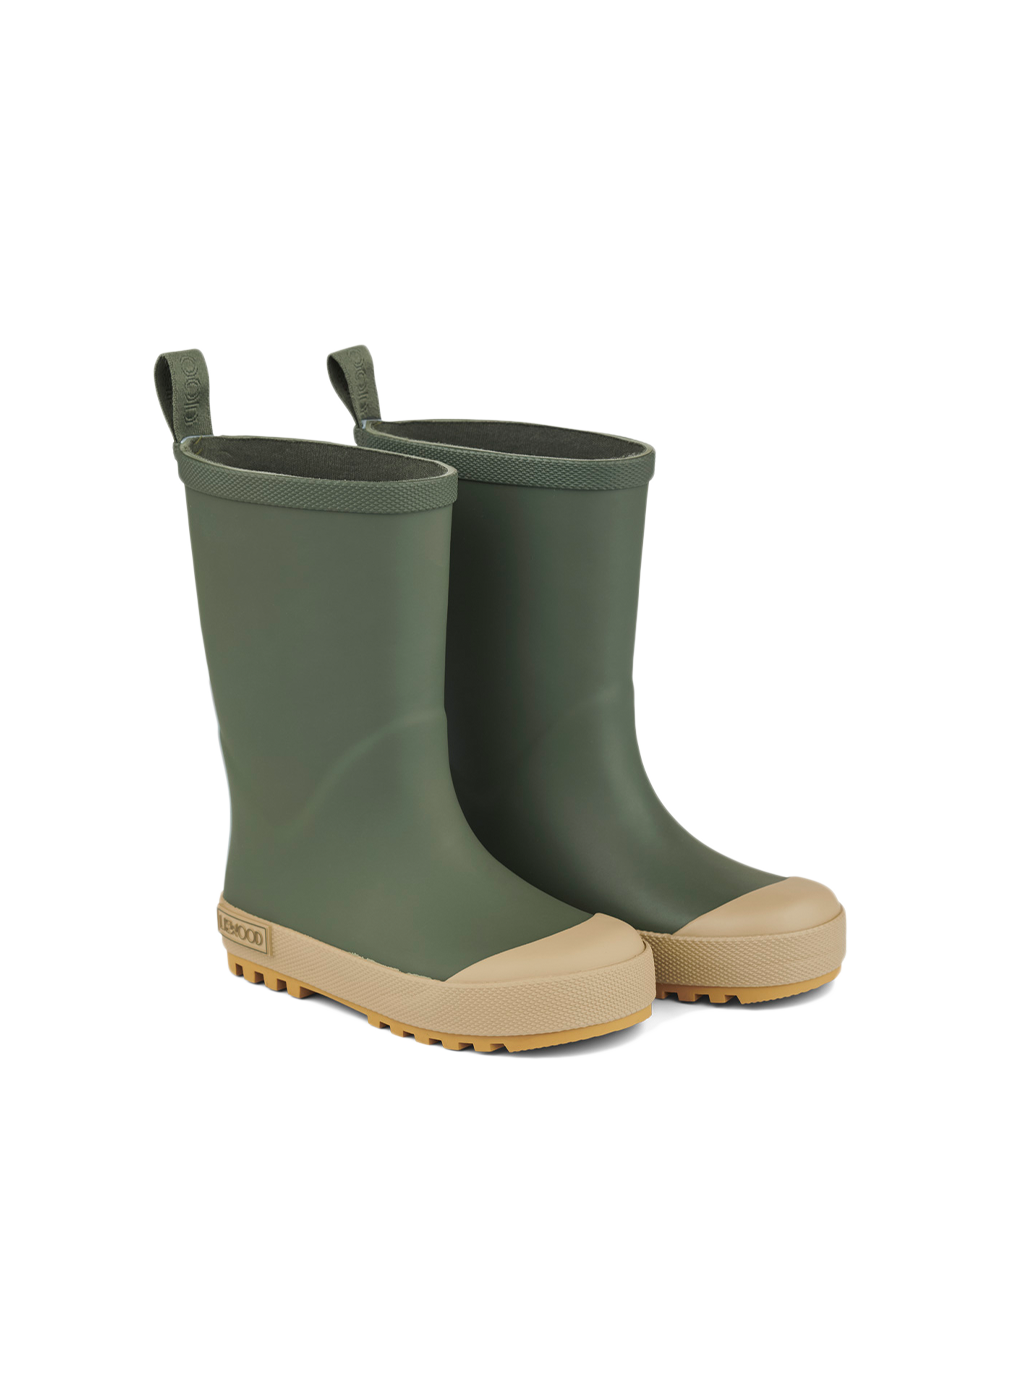 River rain boots